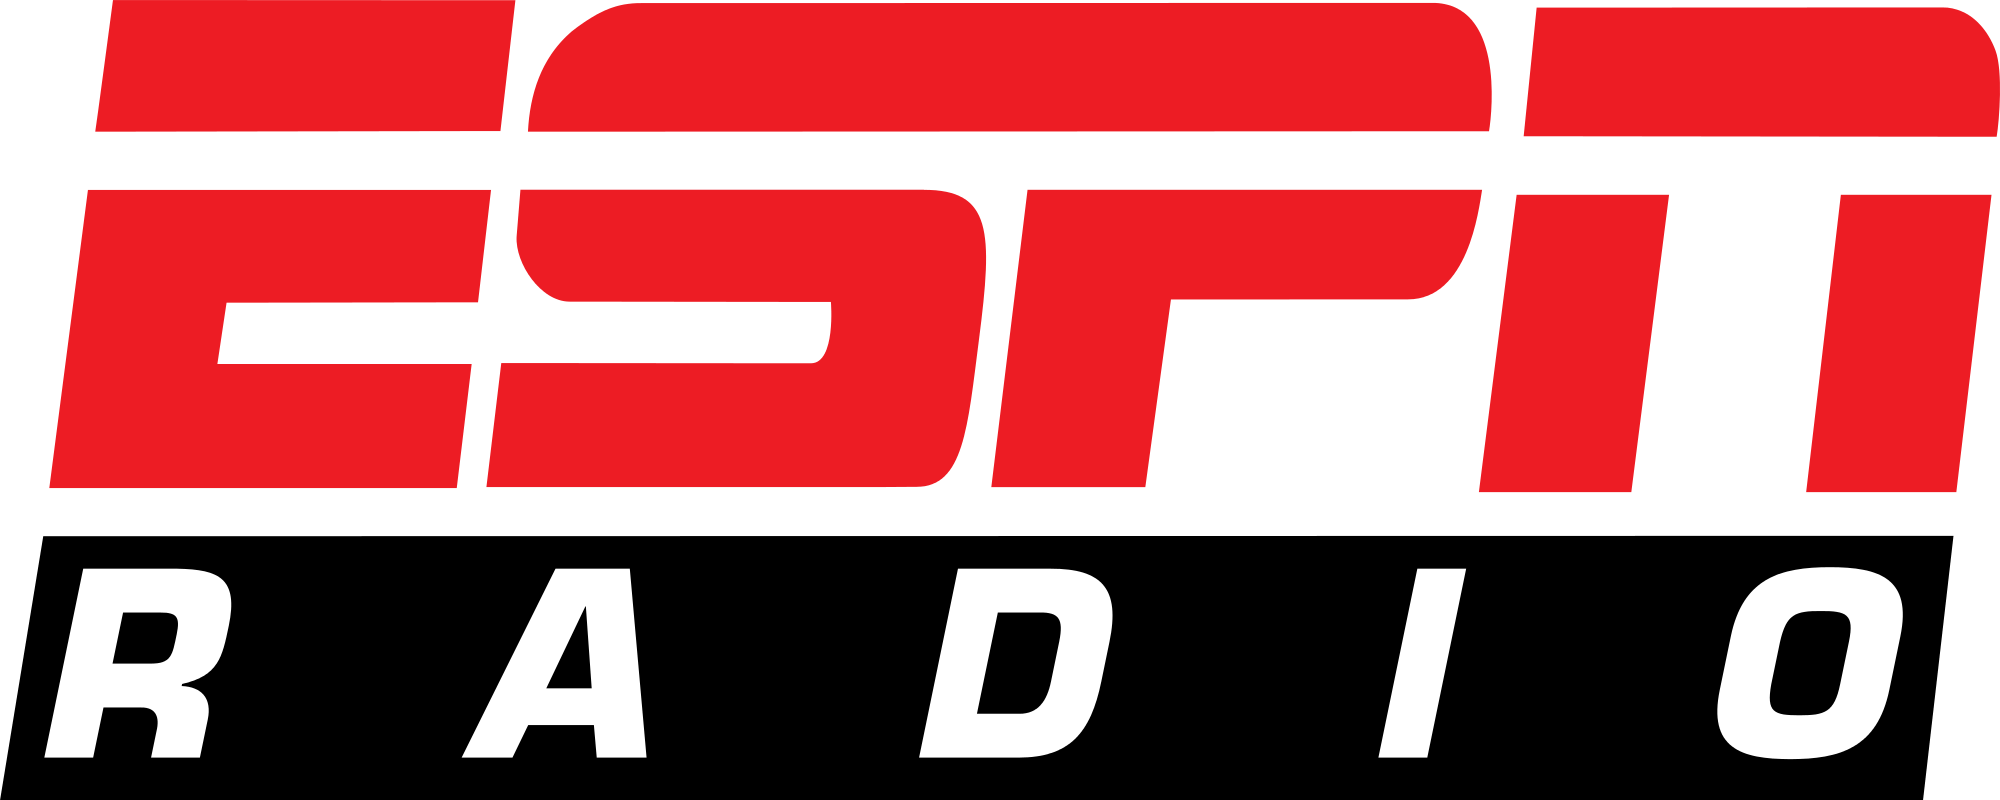 New ESPN Logo - File:ESPN Radio logo 1992-2008.svg - Wikimedia Commons